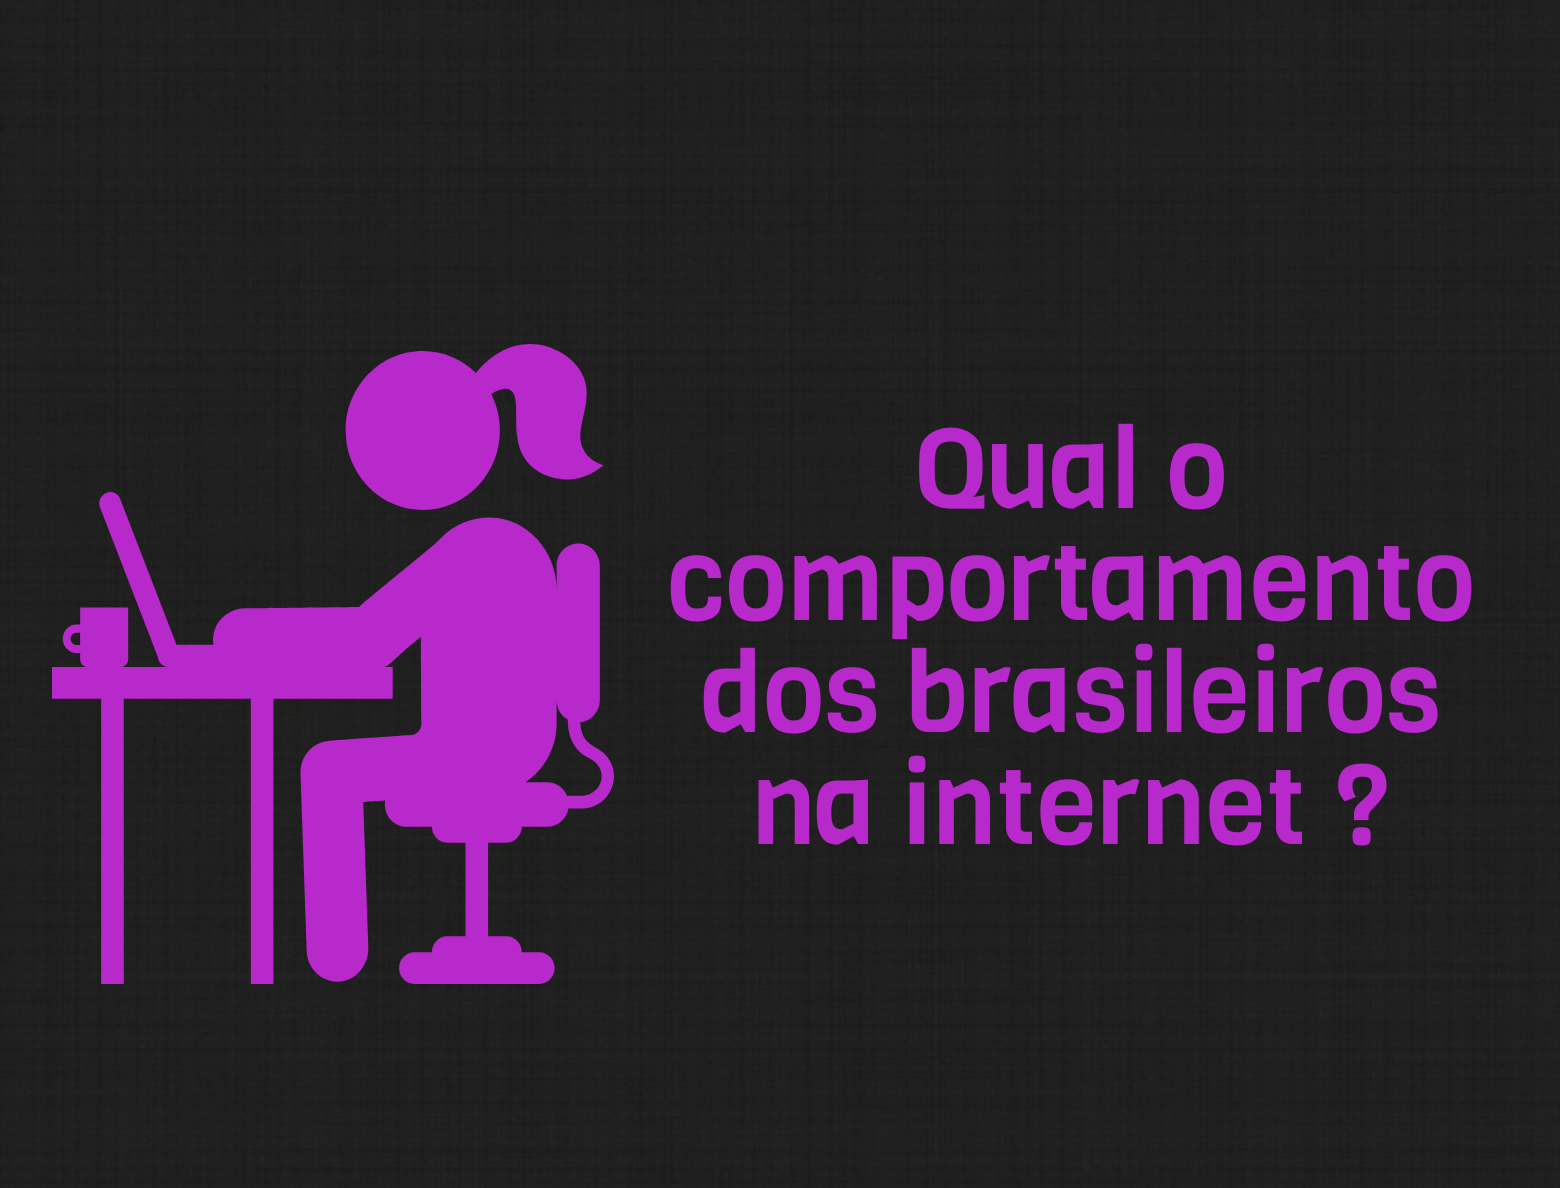 [INFOGRÁFICO] Comportamento dos brasileiros na internet, como é?